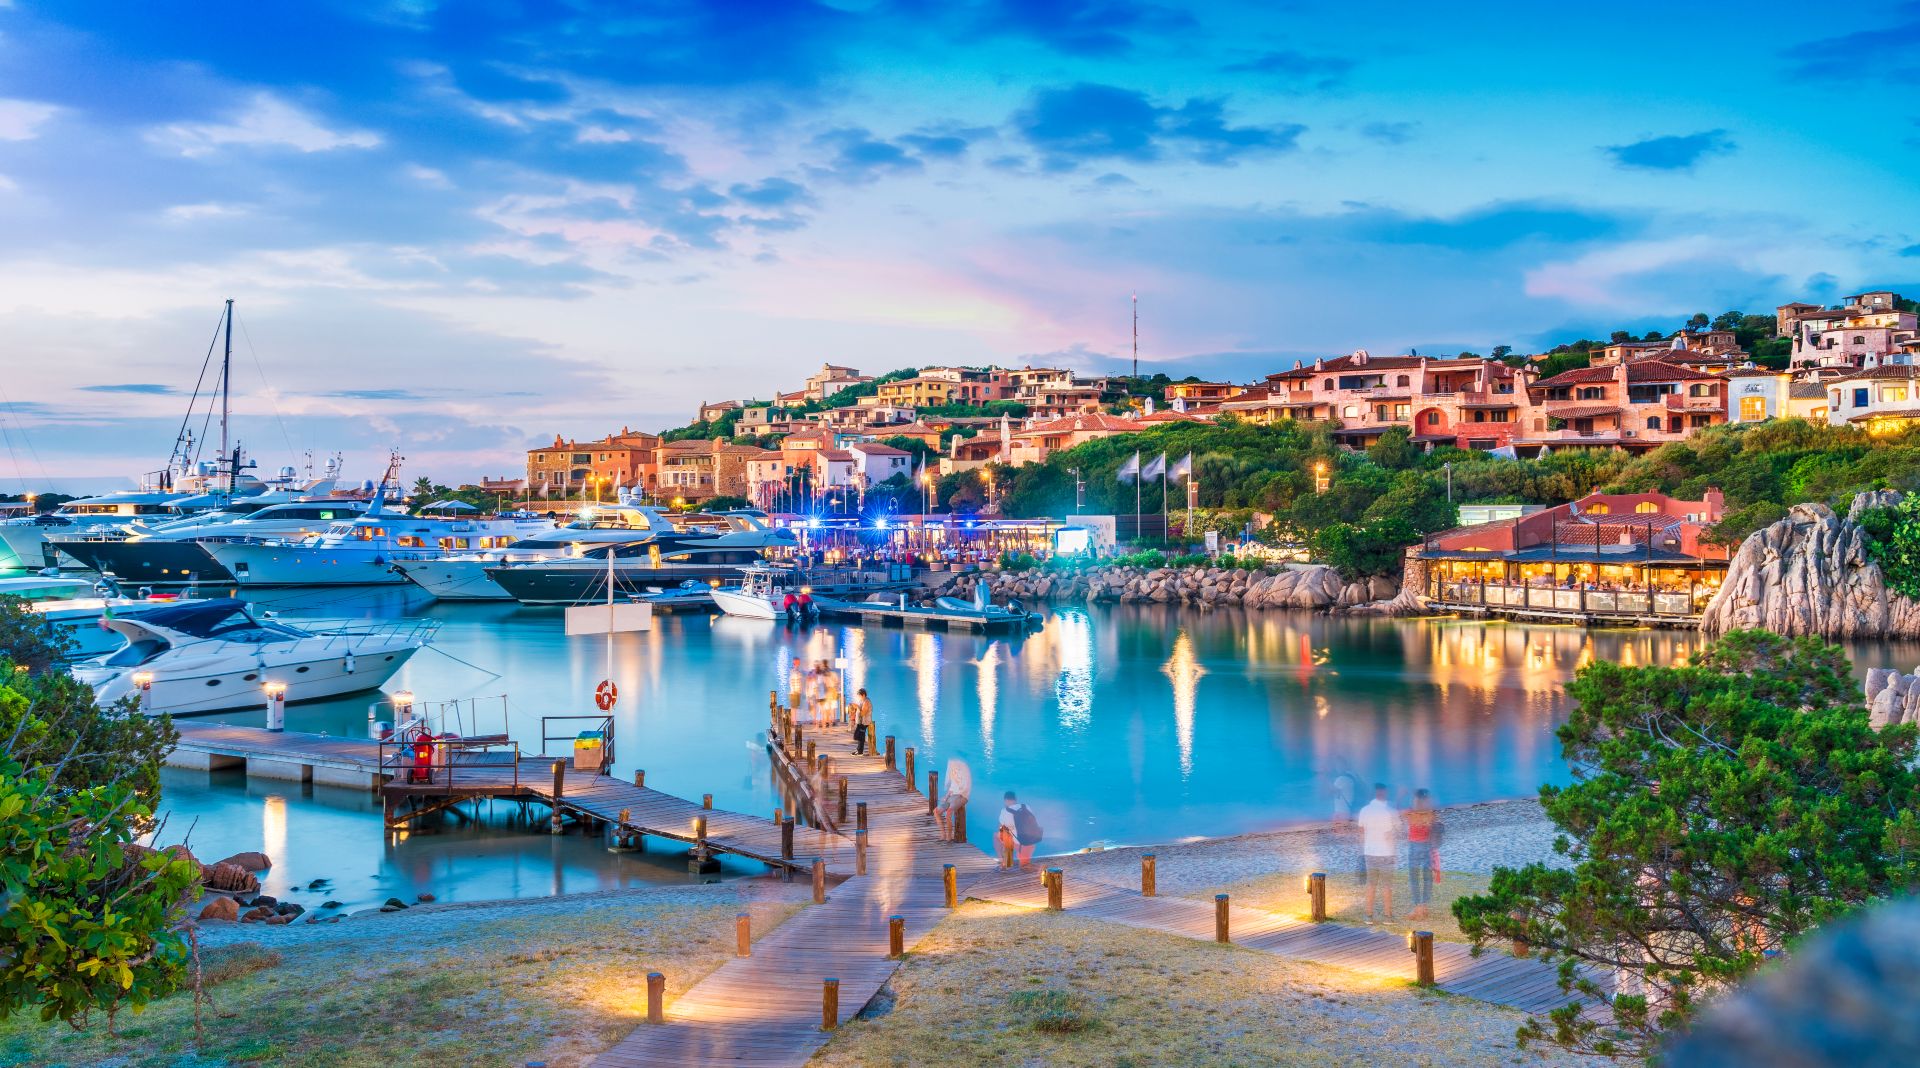 View of the port and the village of Porto Cervo, Sardinia island, Italy